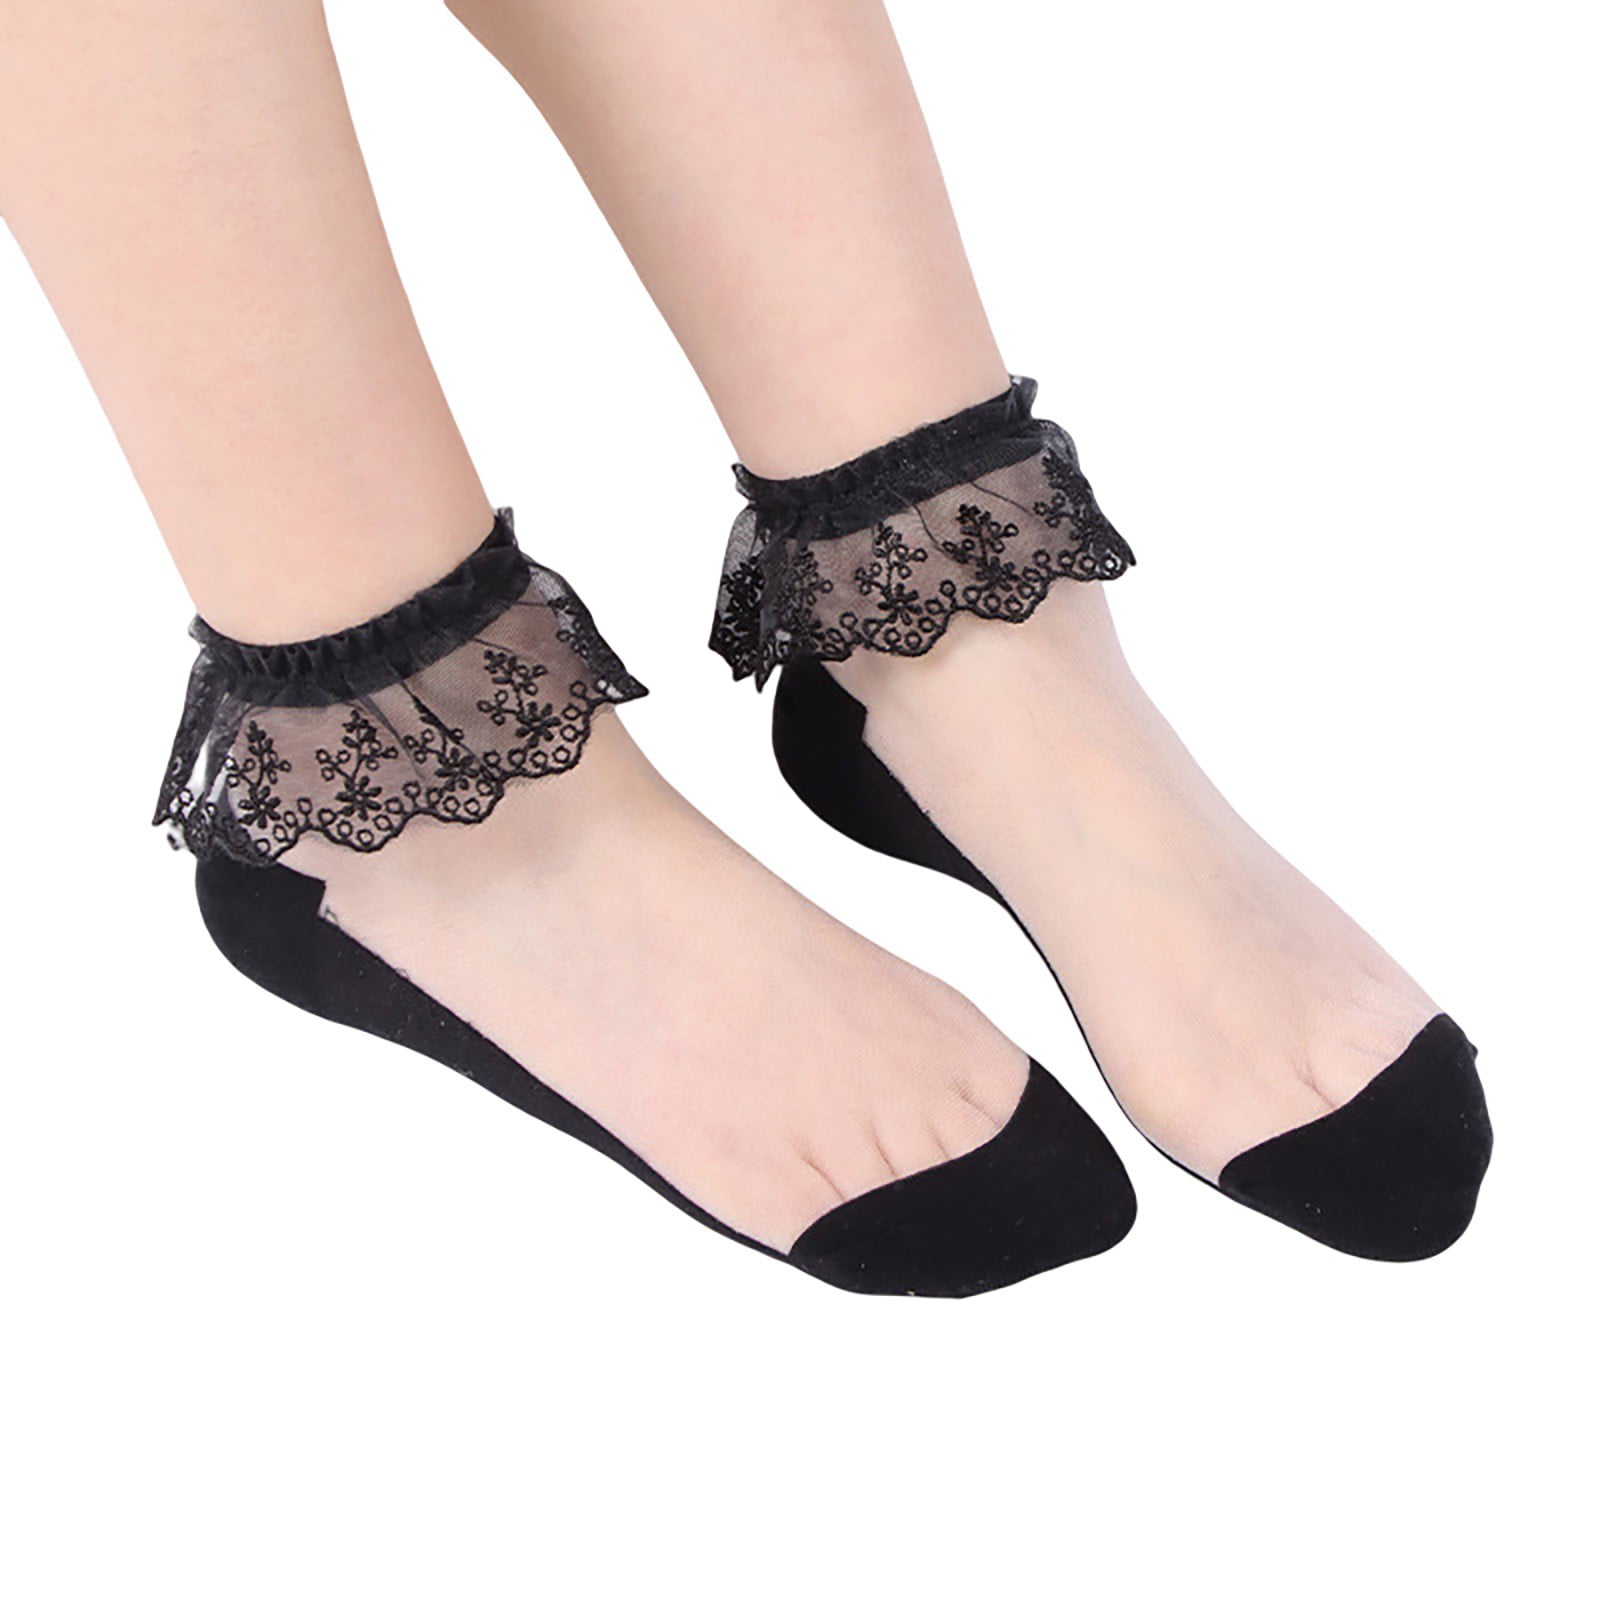 10 pairs of ballerina socks women' socks boat socks Black 